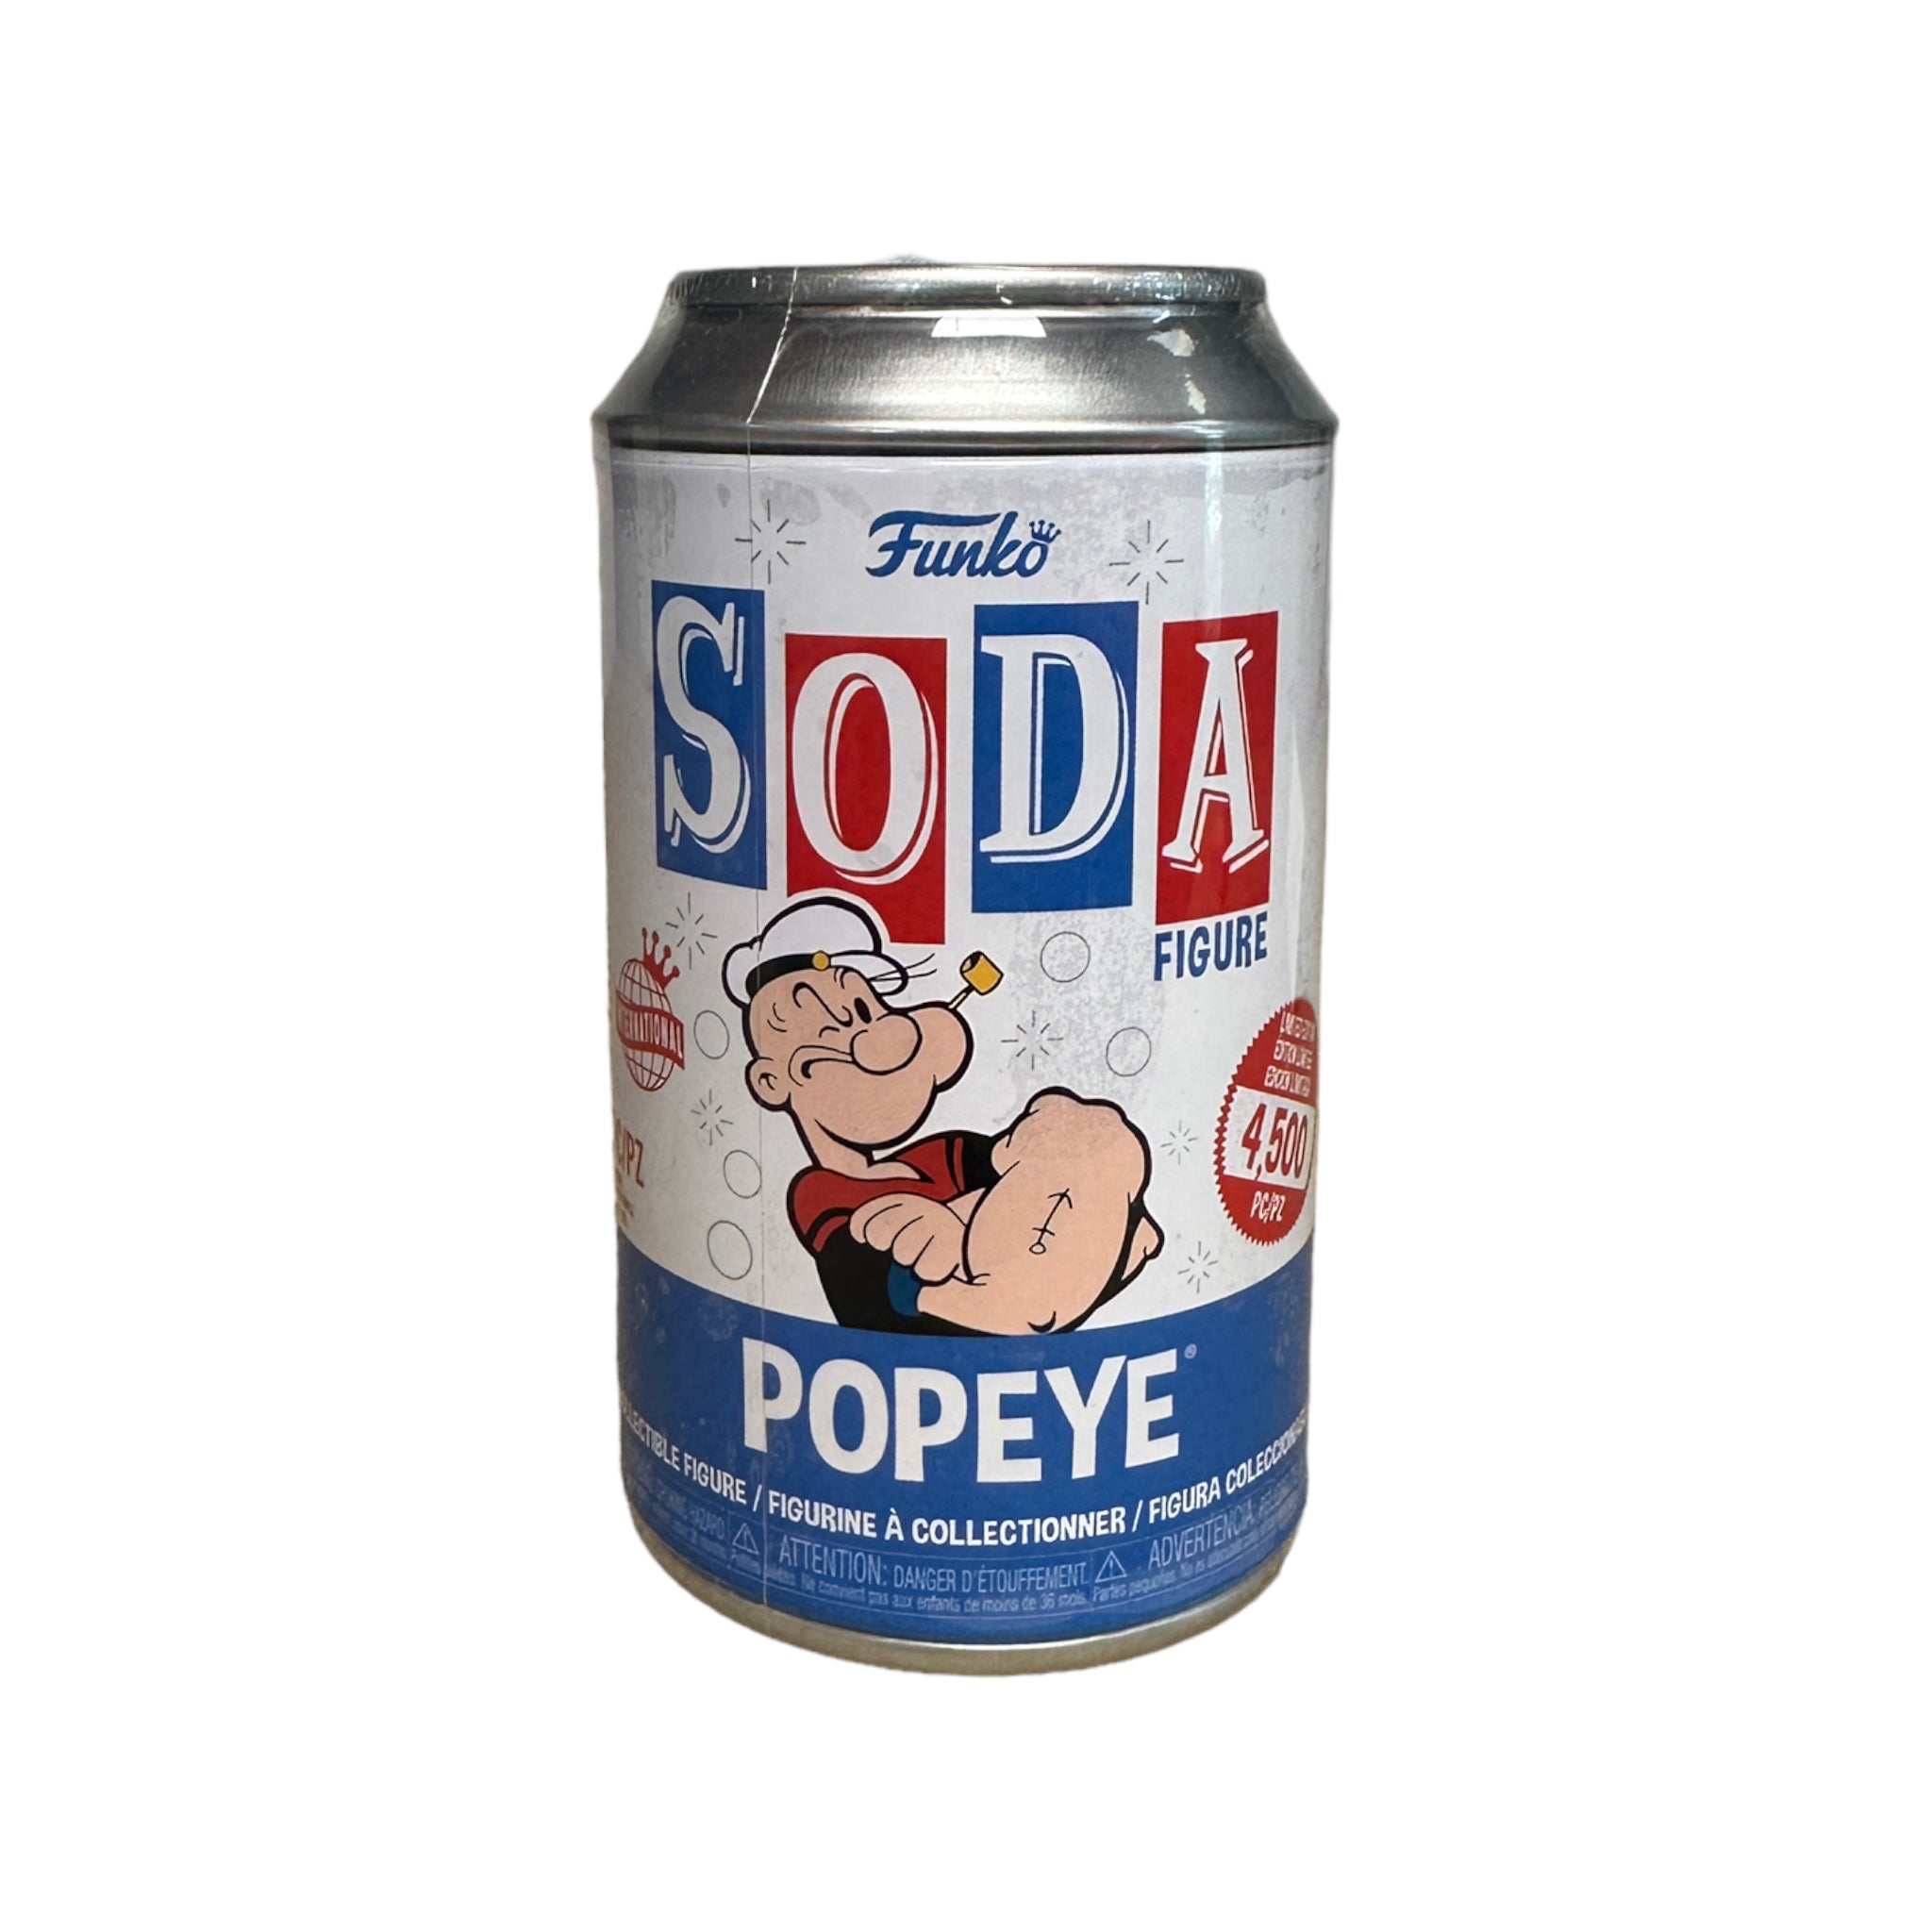 Popeye Funko Soda Vinyl Figure! - Popeye - International LE4500 Pcs - Chance of Chase